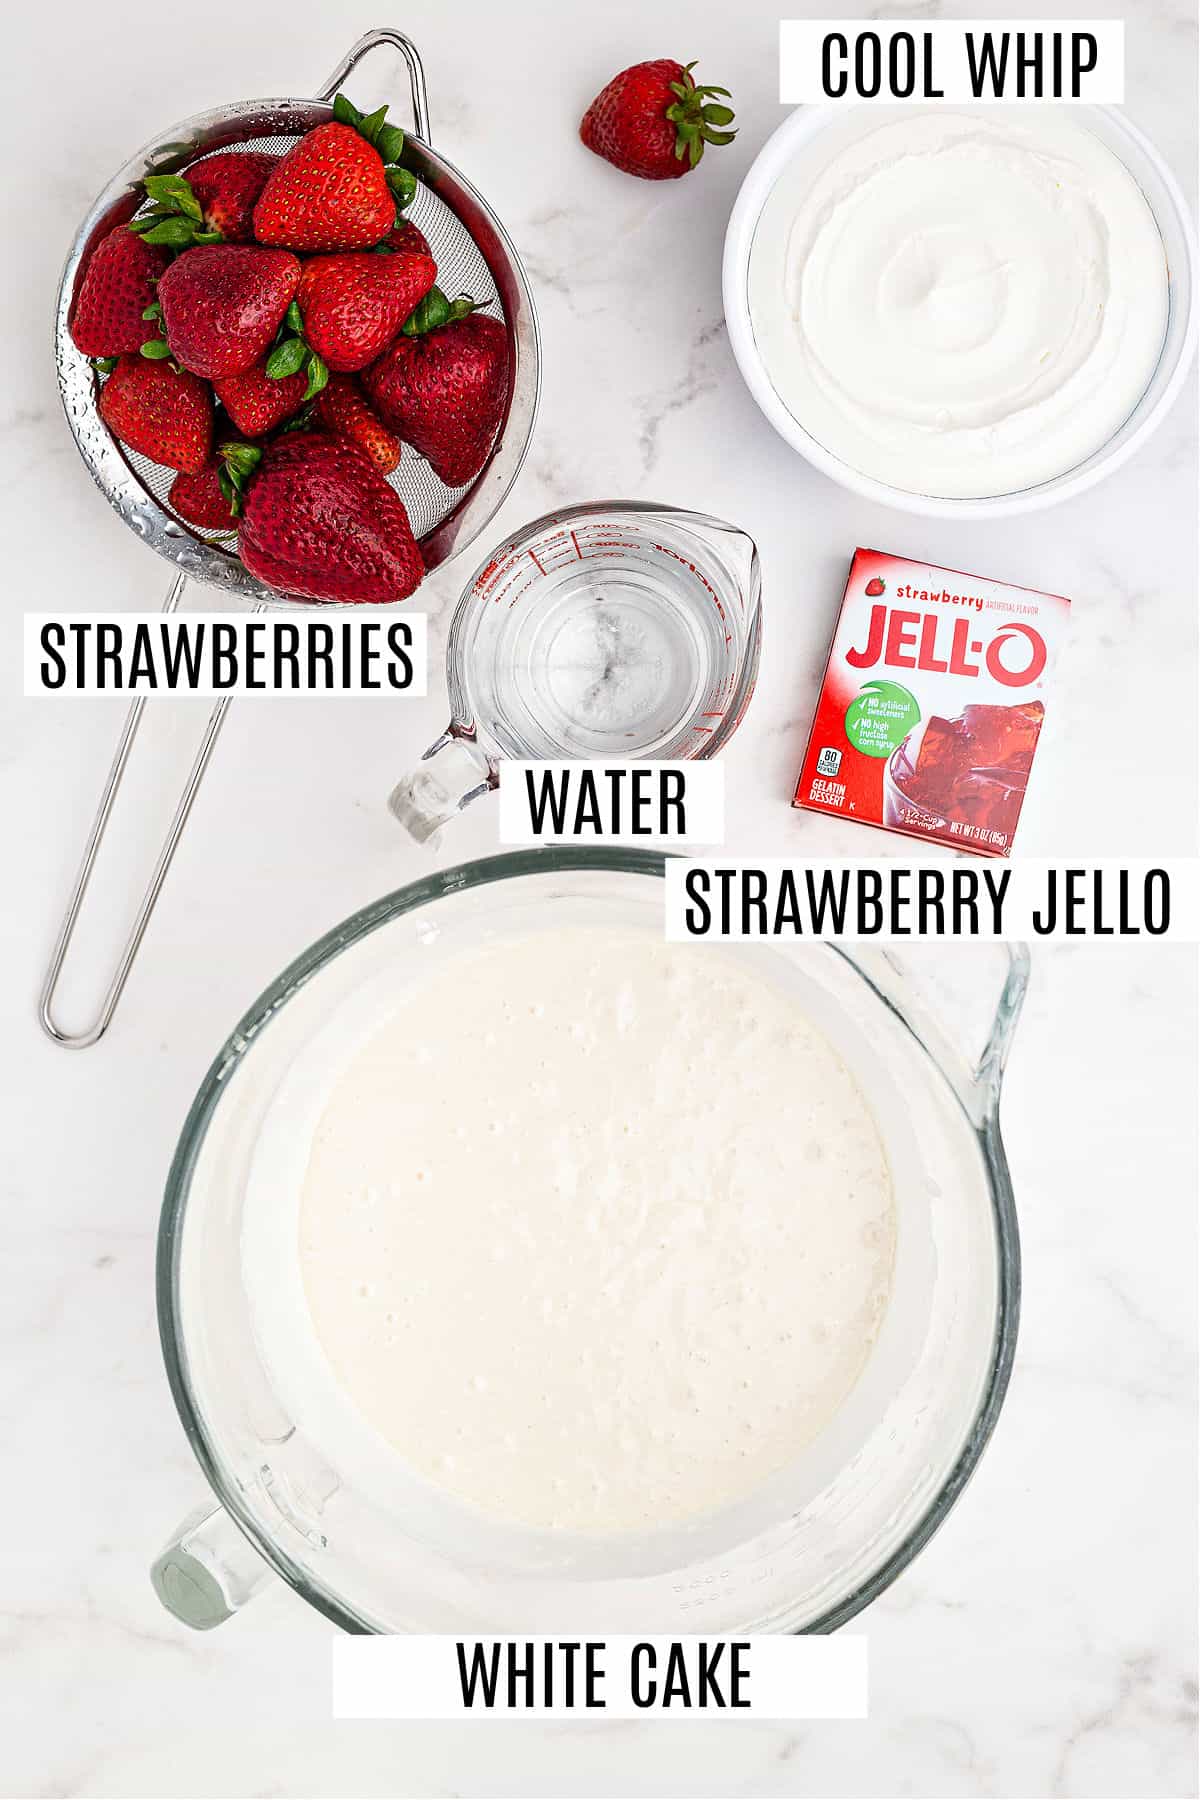 Strawberry jello cake ingredients on counter.